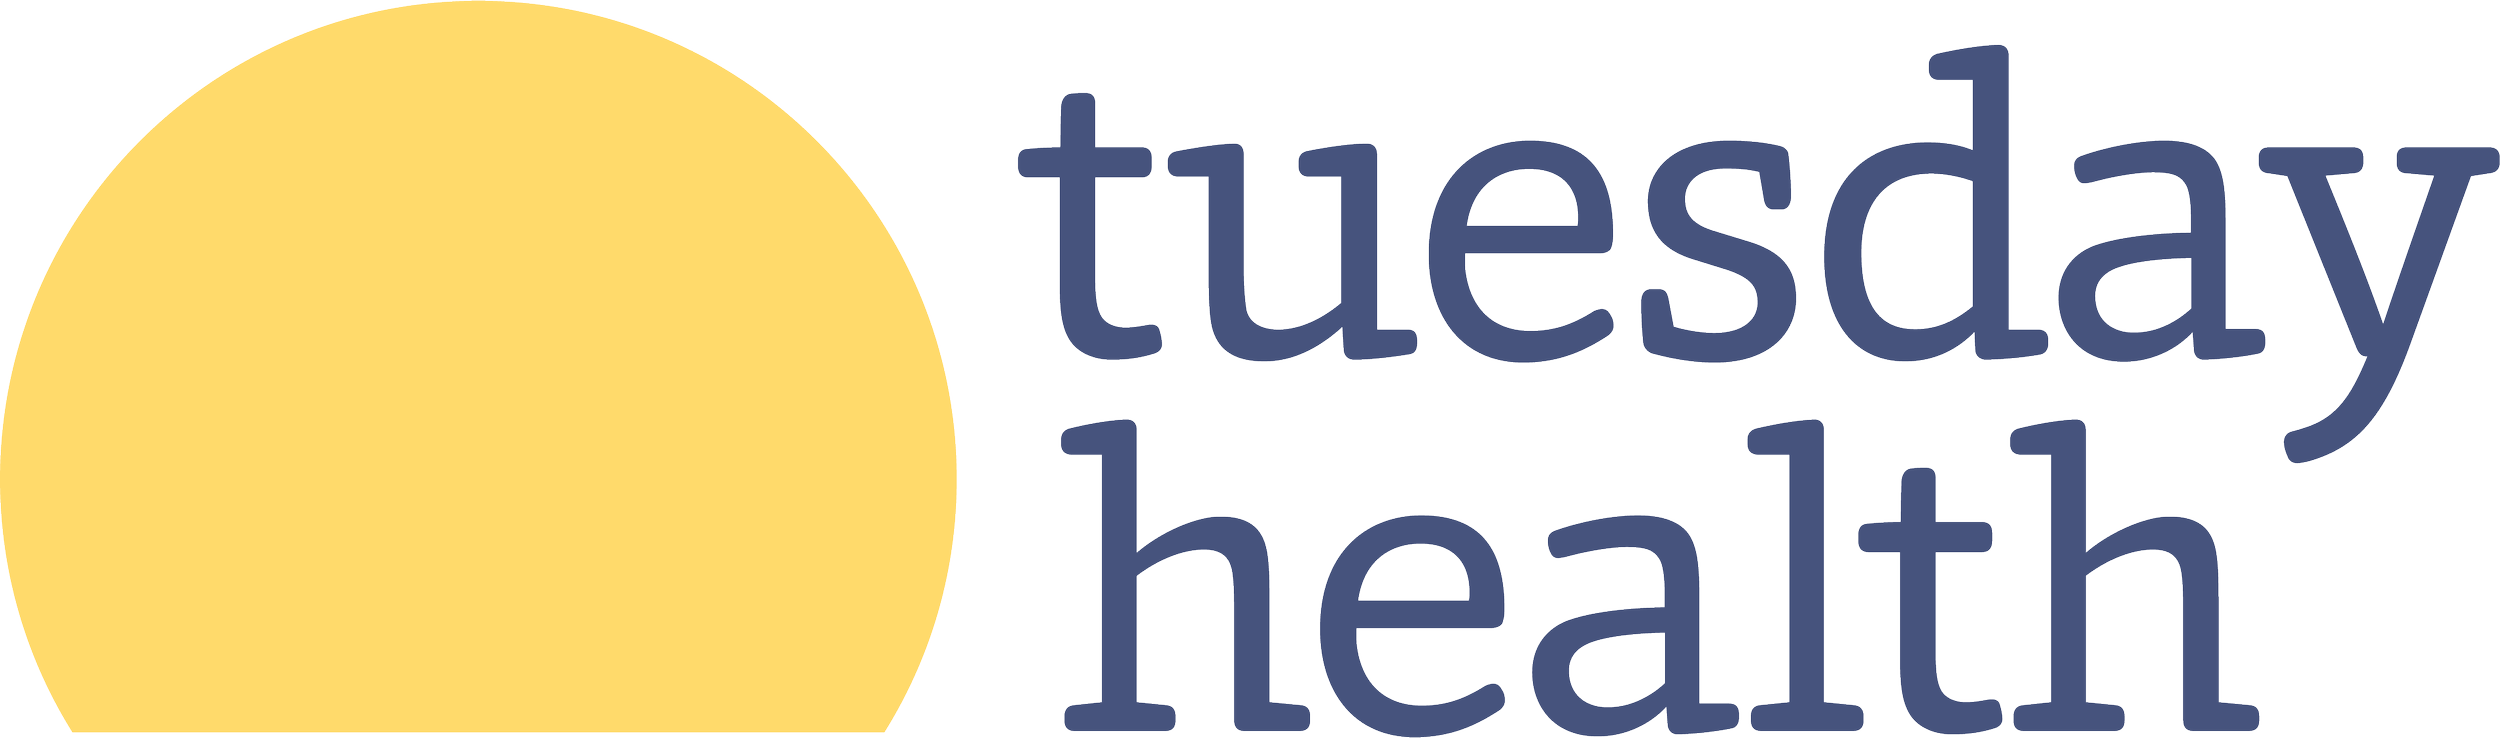 Tuesday Health Logo